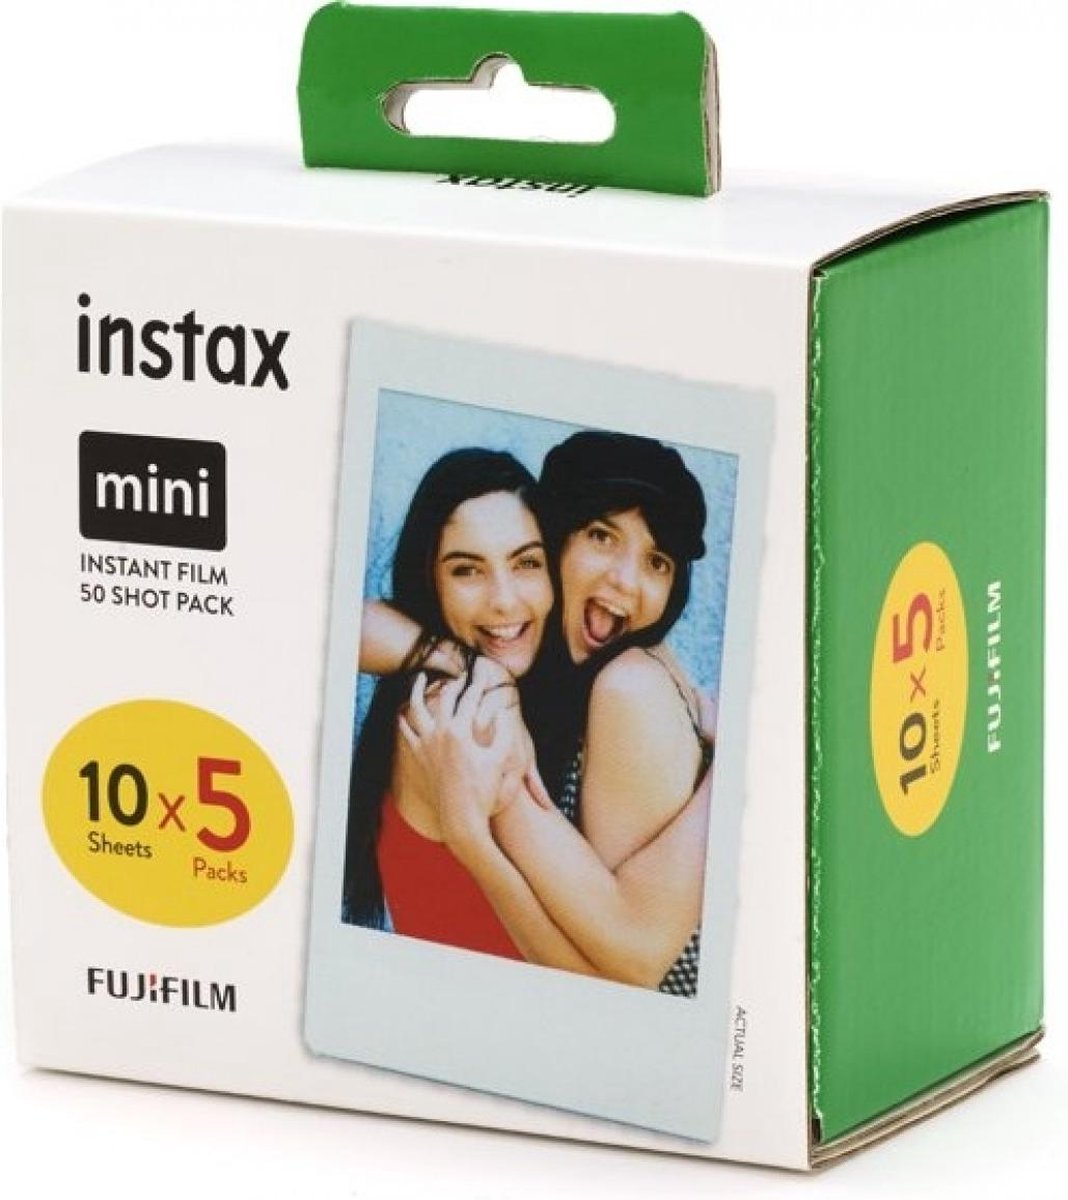 Papiers Photo,Fujifilm Instax Mini Film Instax film carré bord